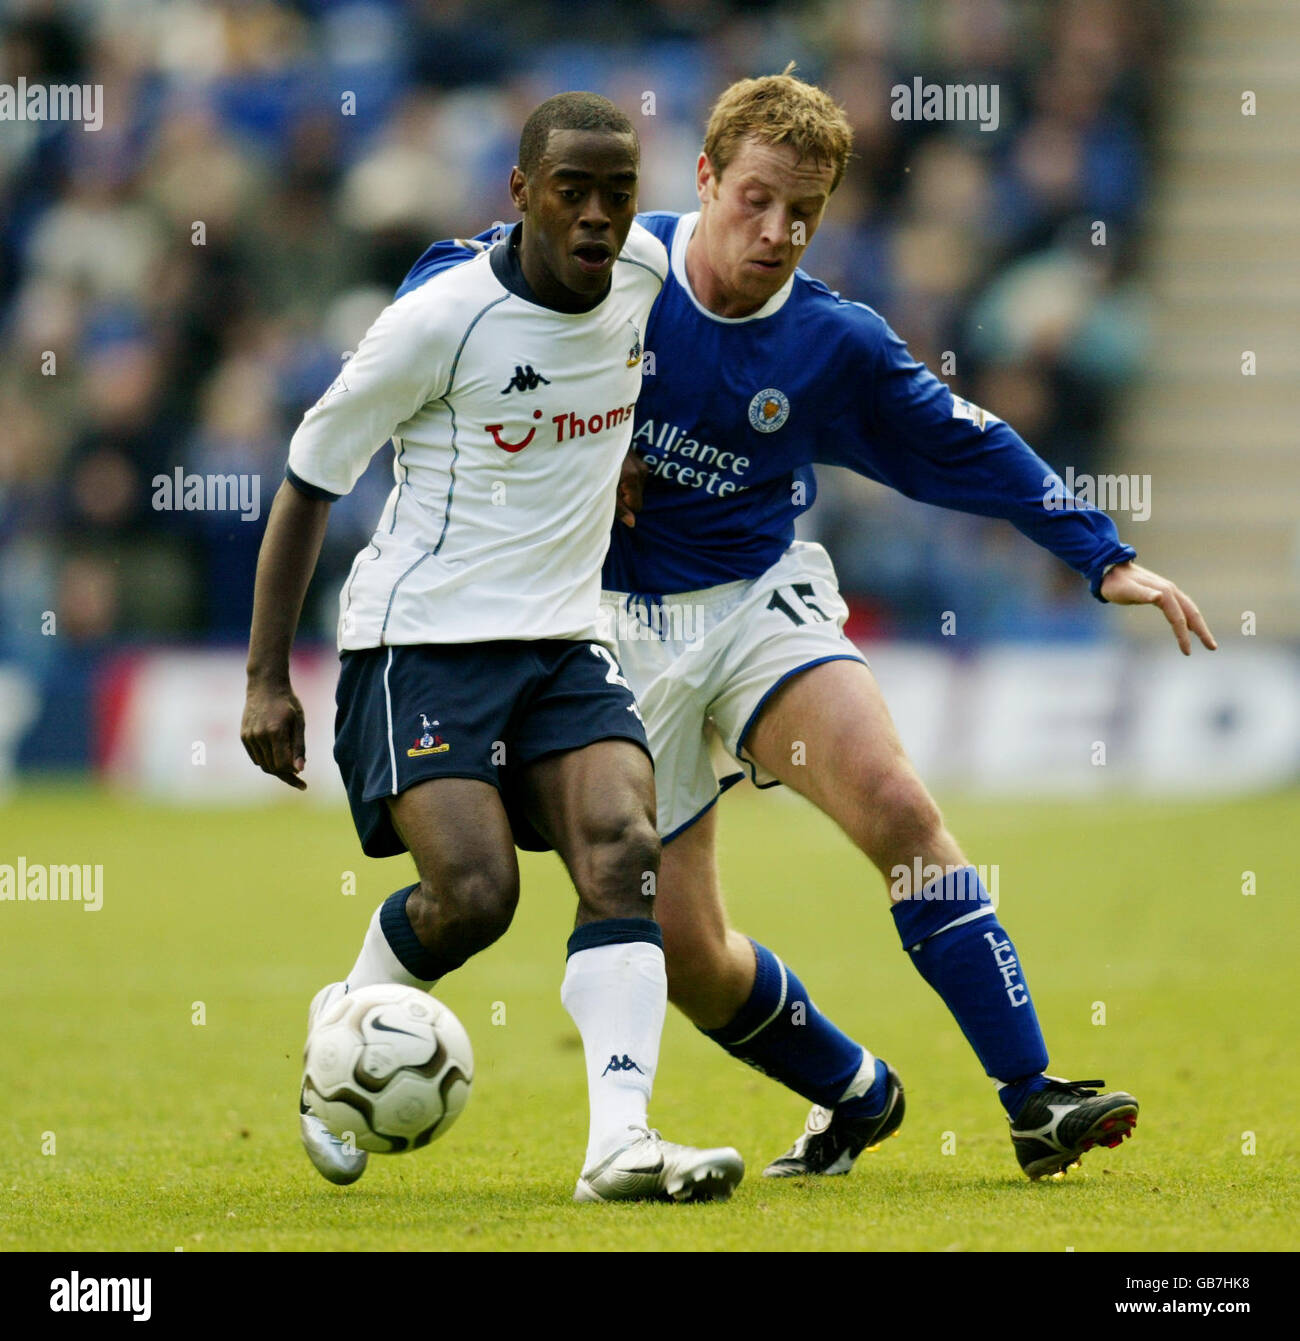 Fútbol - Fa Barclaycard Premiership - Leicester City v Tottenham Hotspur. Ala Rogers de Leicester City y Rohan Ricketts de Tottenham Hotspur Foto de stock